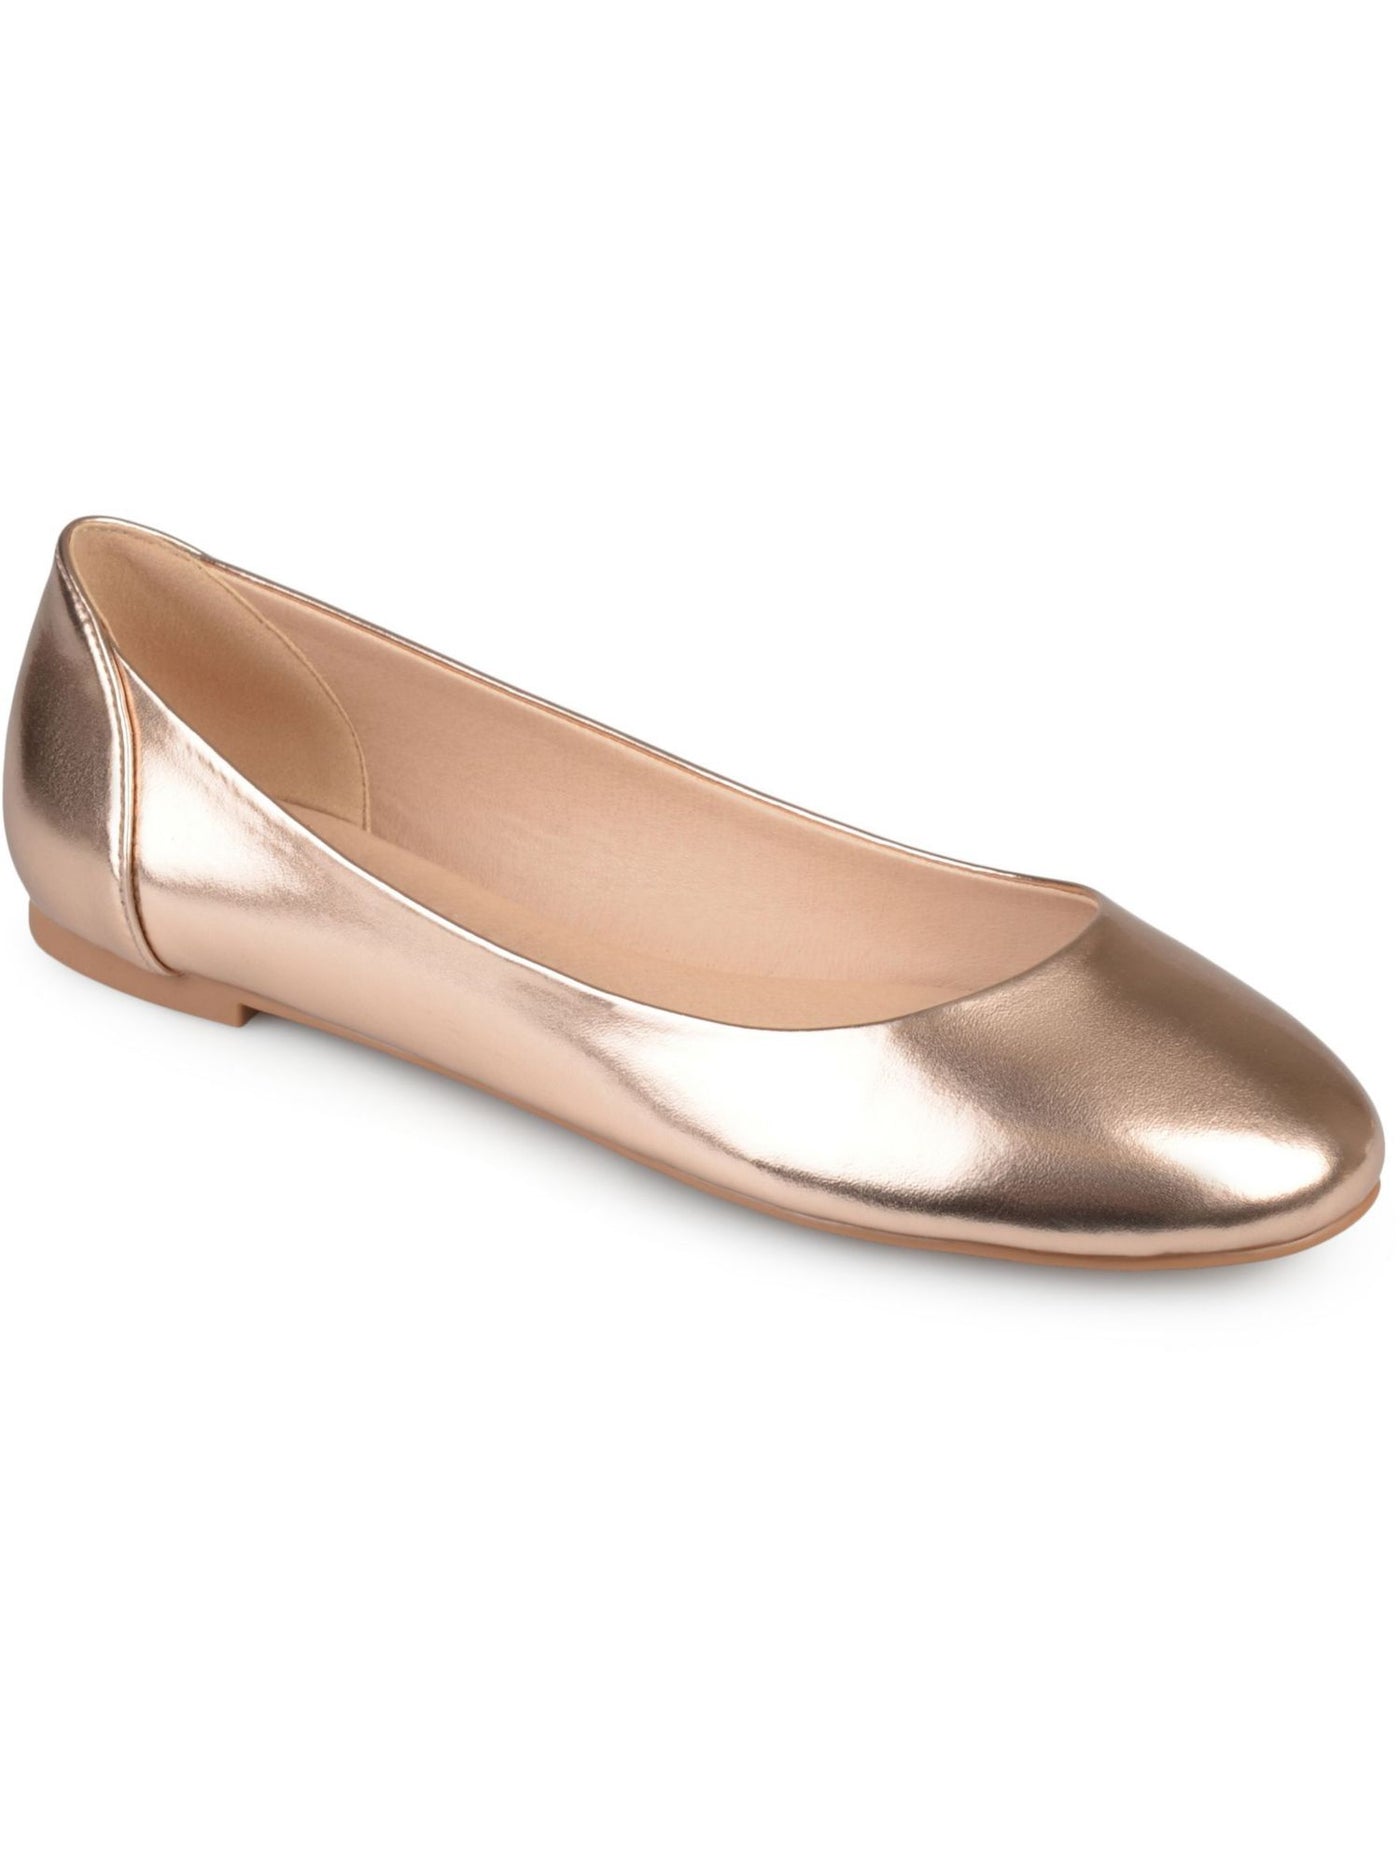 JOURNEE COLLECTION Womens Gold Comfort Metallic Padded Kavn Round Toe Slip On Ballet Flats 7 W